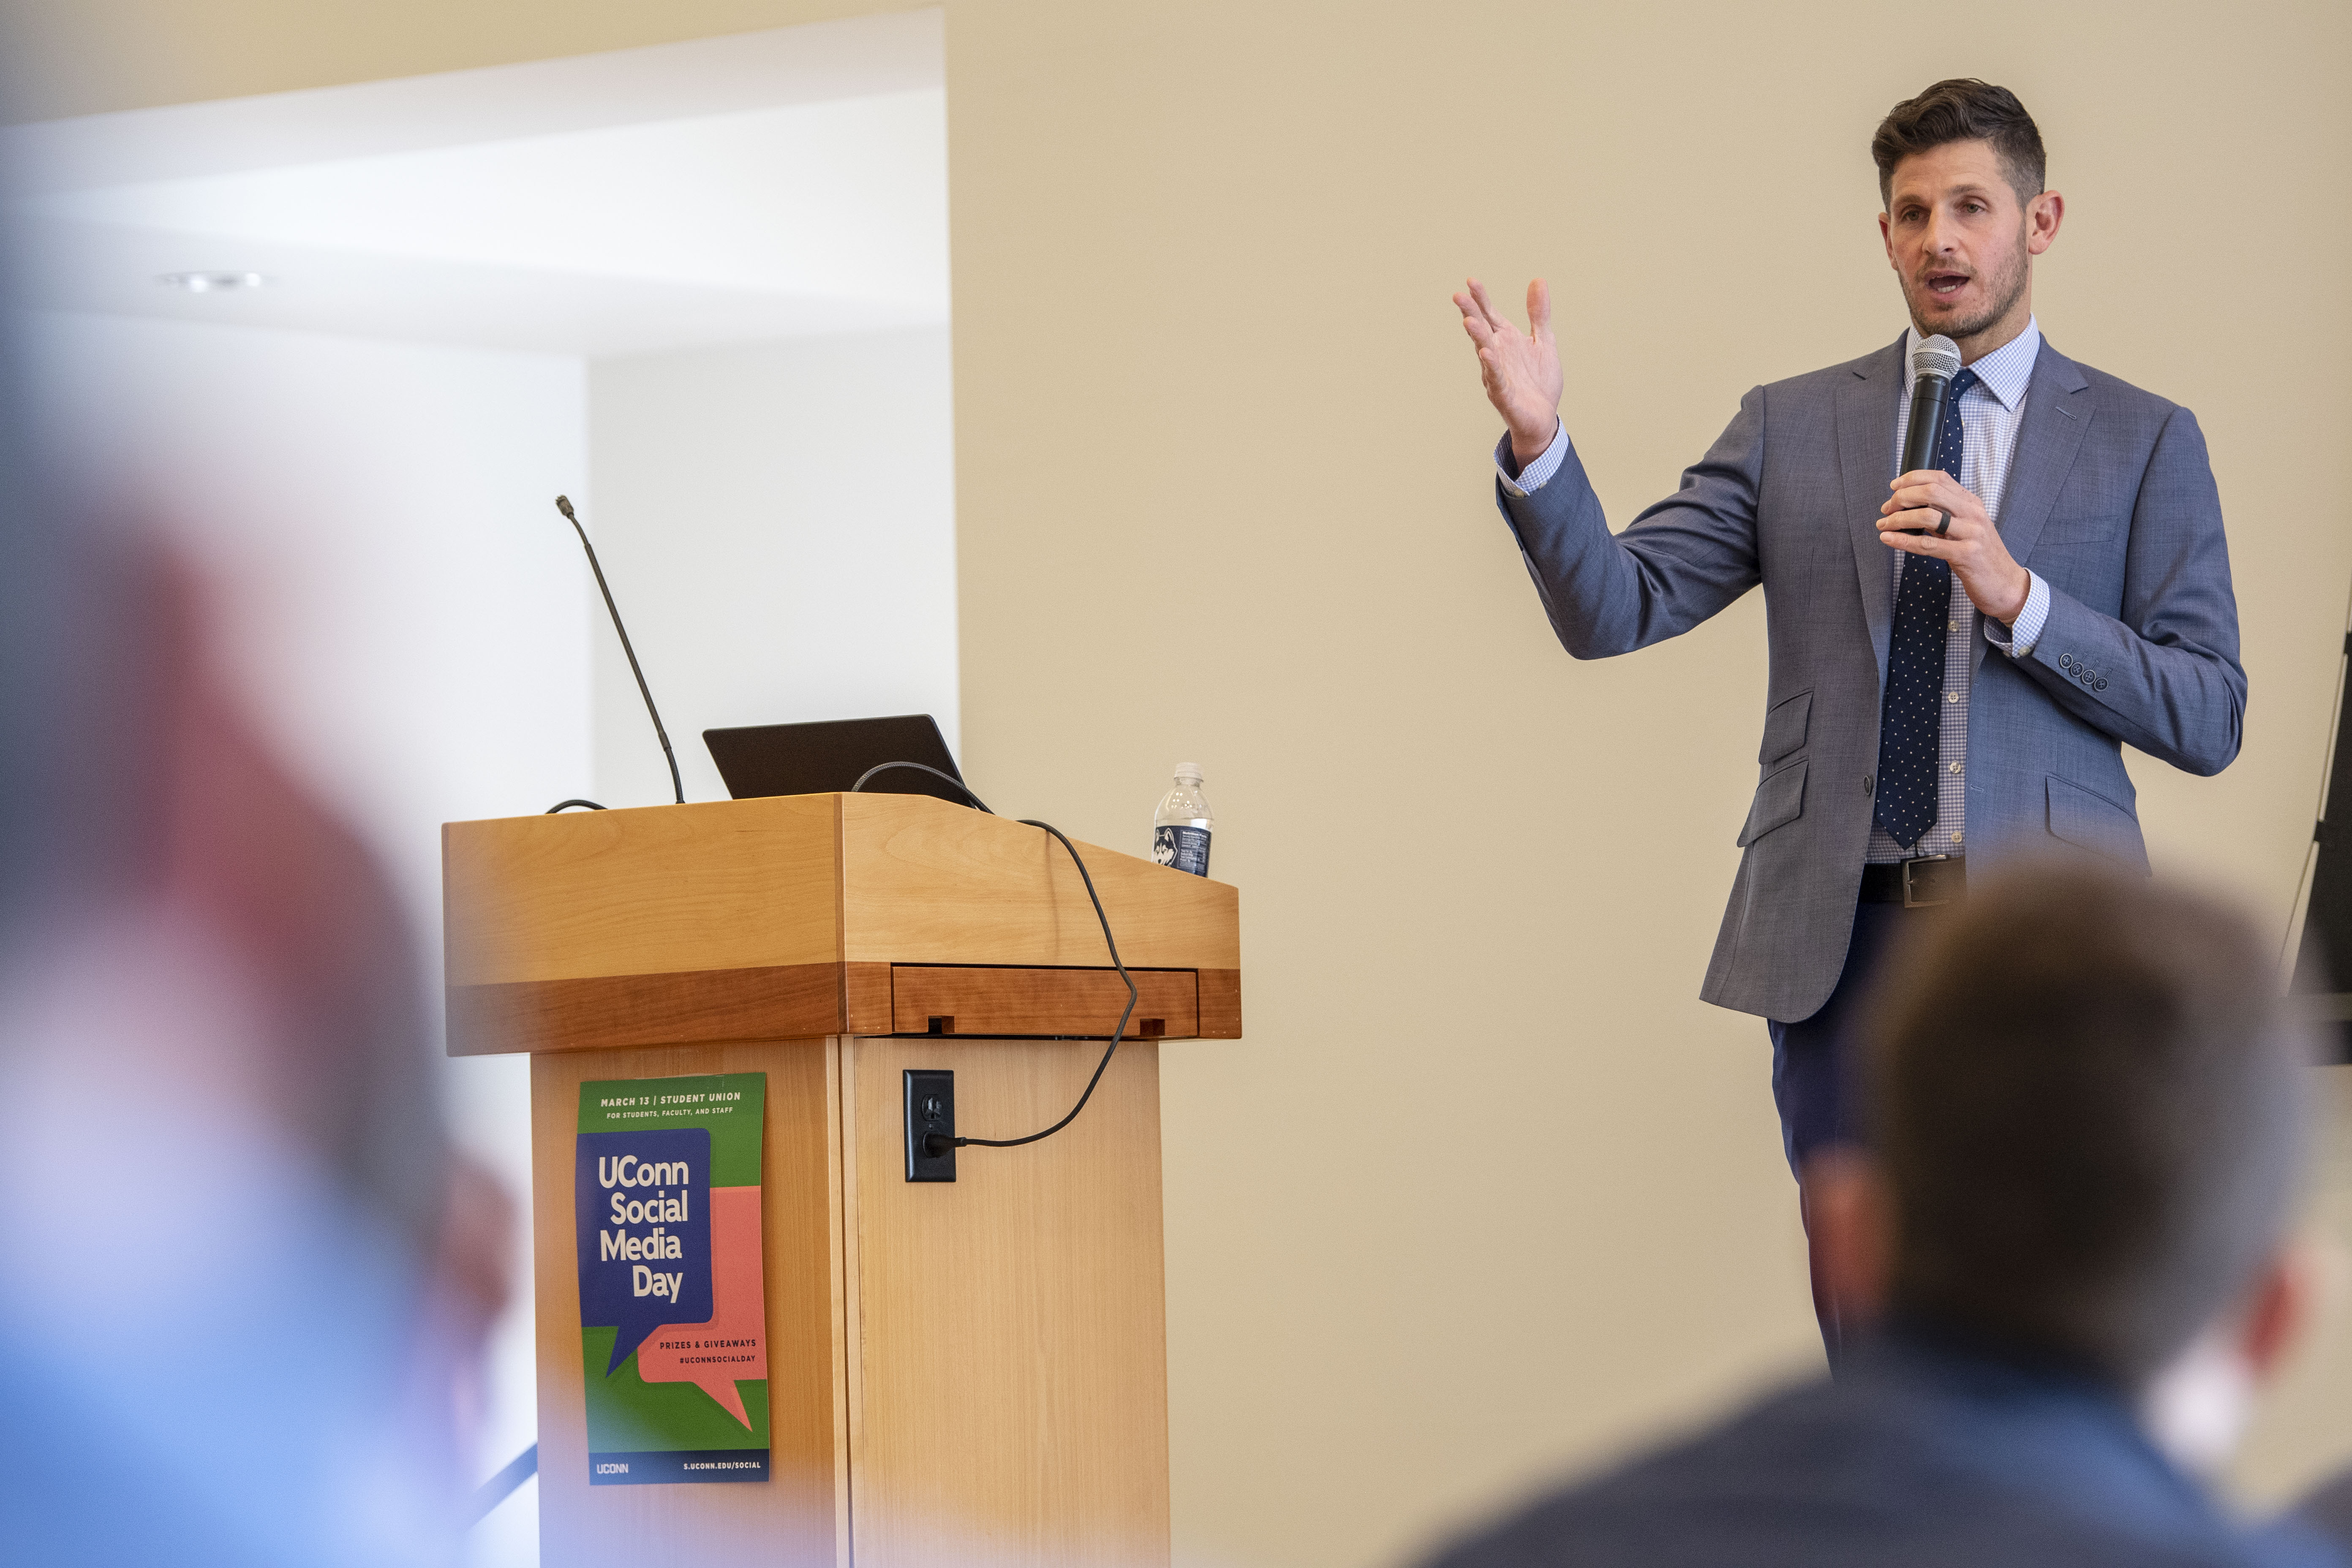 Dan Orlovsky giving a presentation at the UConn Social Media Day on March 13, 2019. (Sean Flynn/UConn Photo)